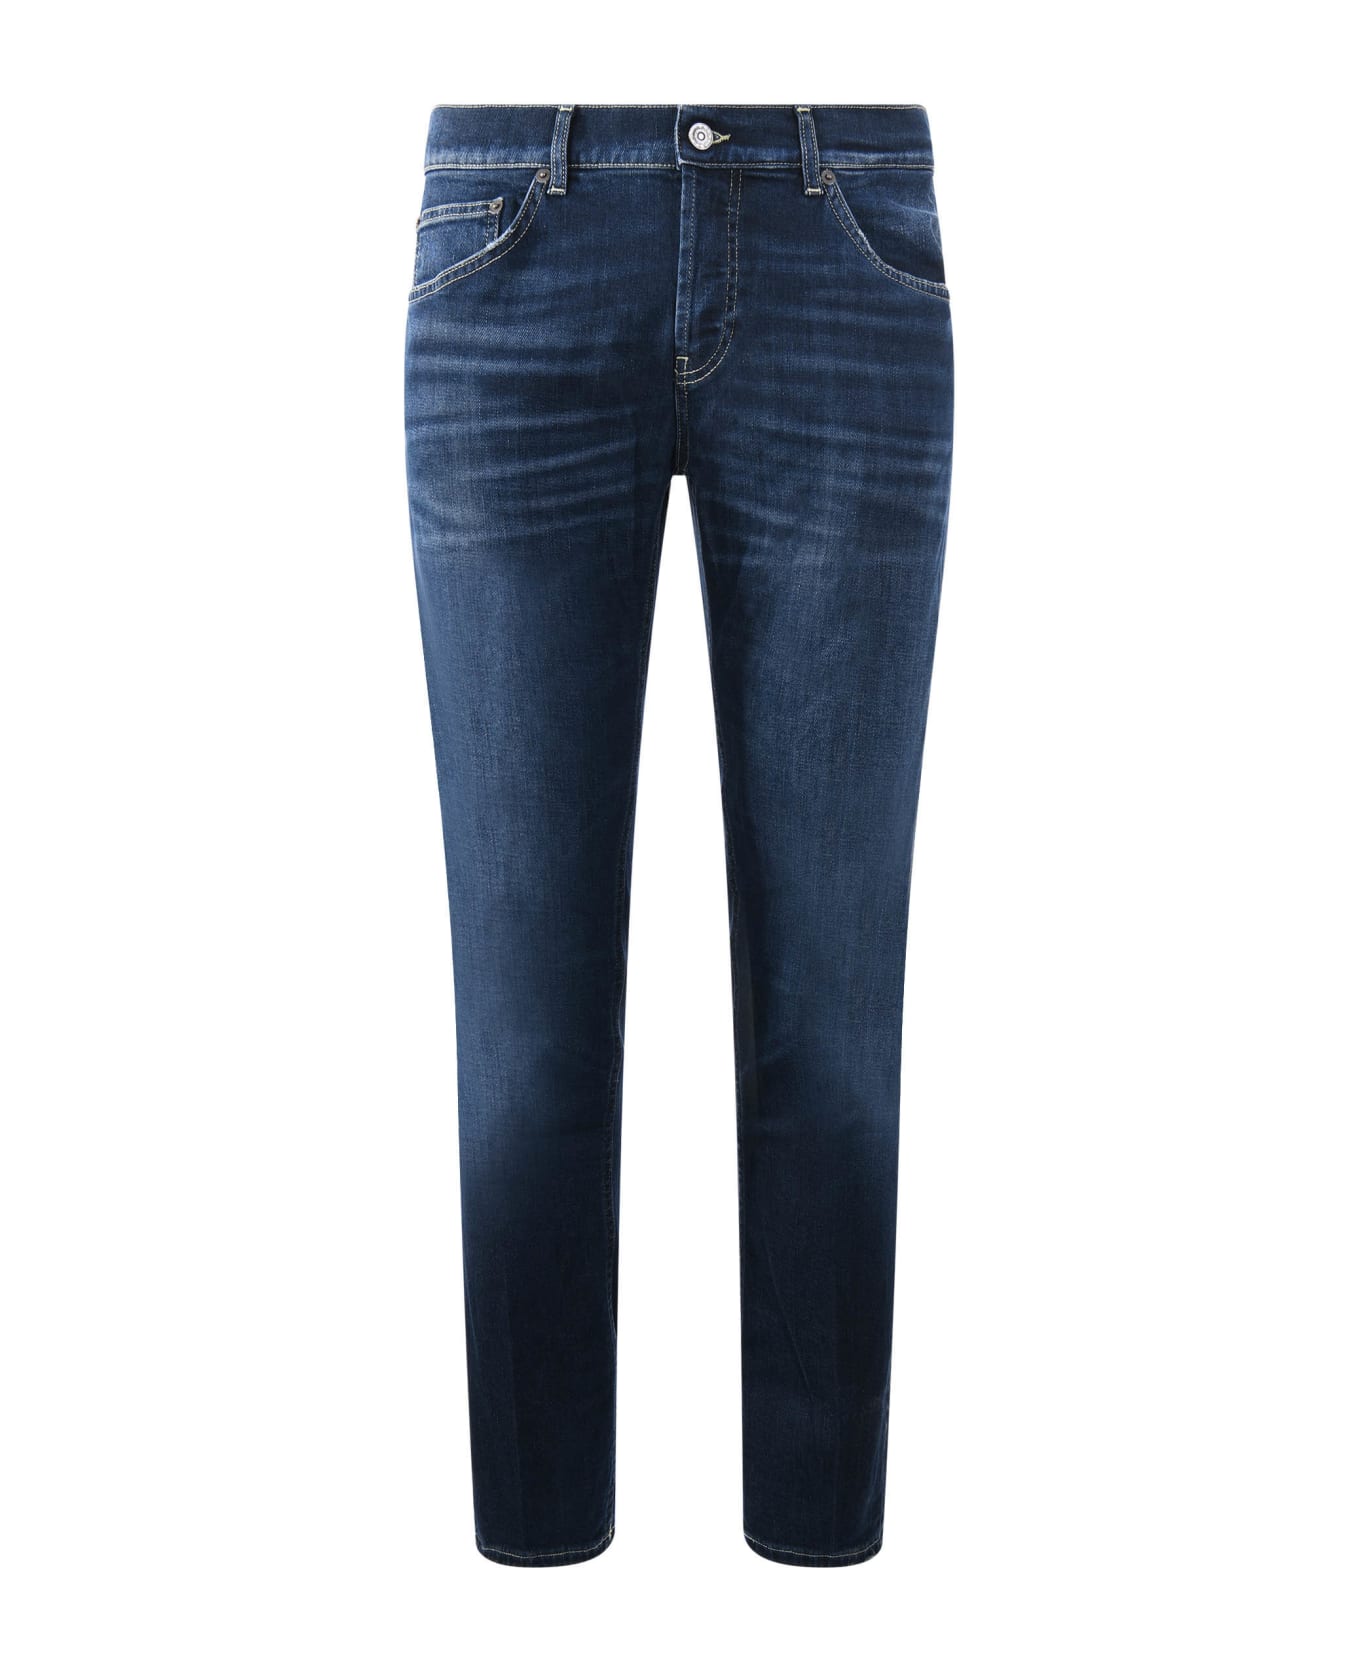 Dondup Mius Slim Fit Jeans In Dark Blue Stretch Denim - Blue デニム